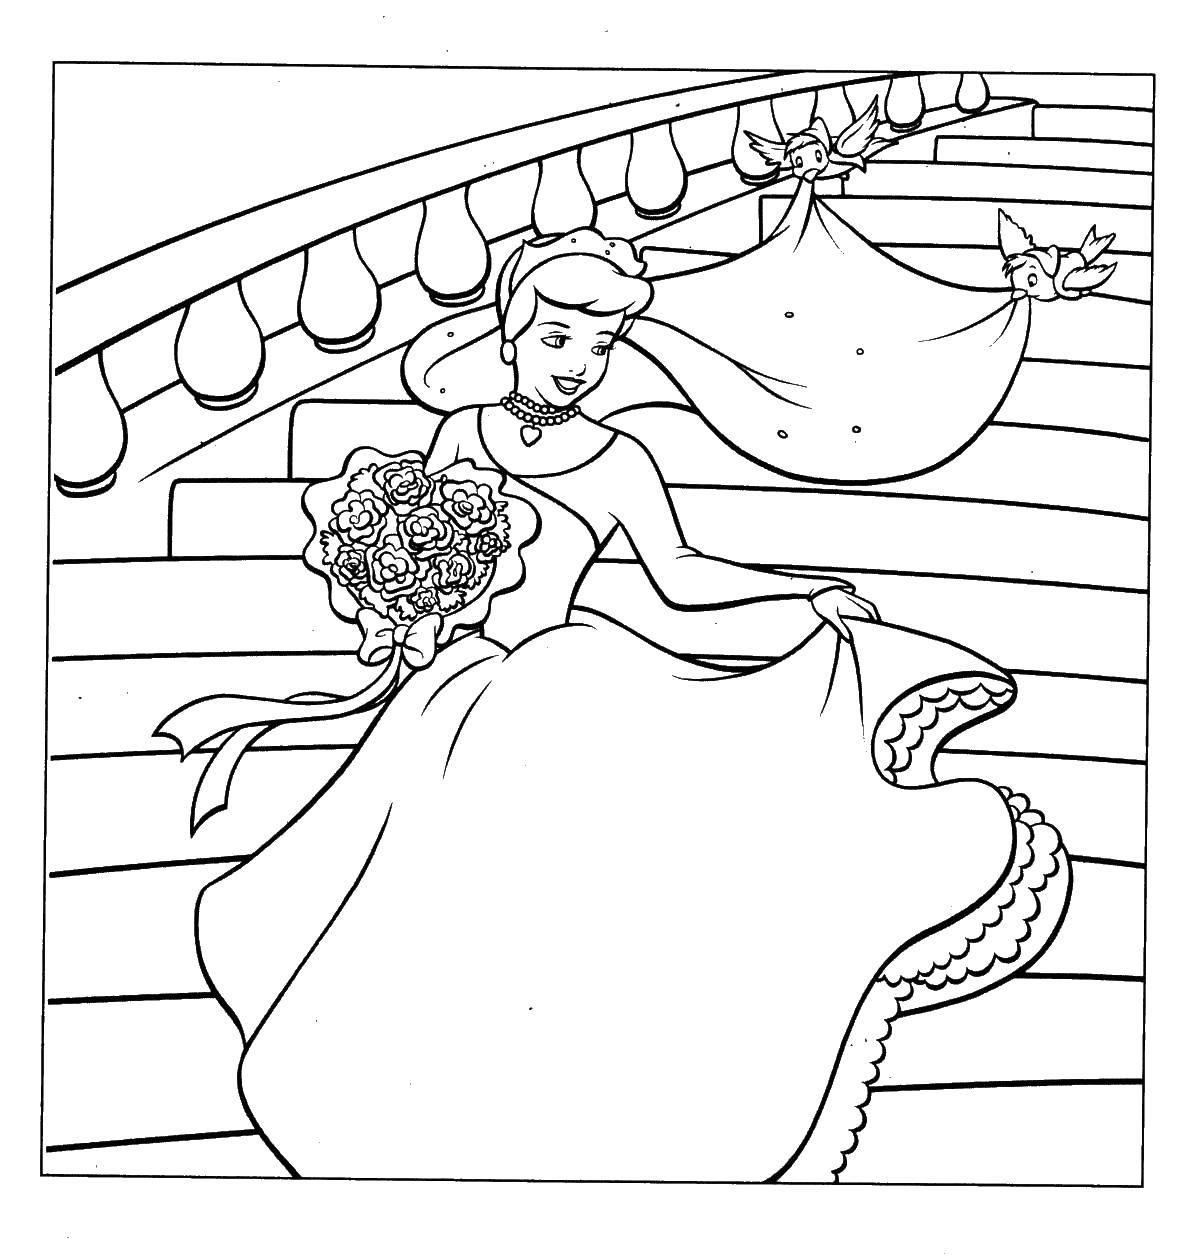 Coloring Cinderella and the birds. Category Princess. Tags:  Princesa, tale, girl, Cinderella.